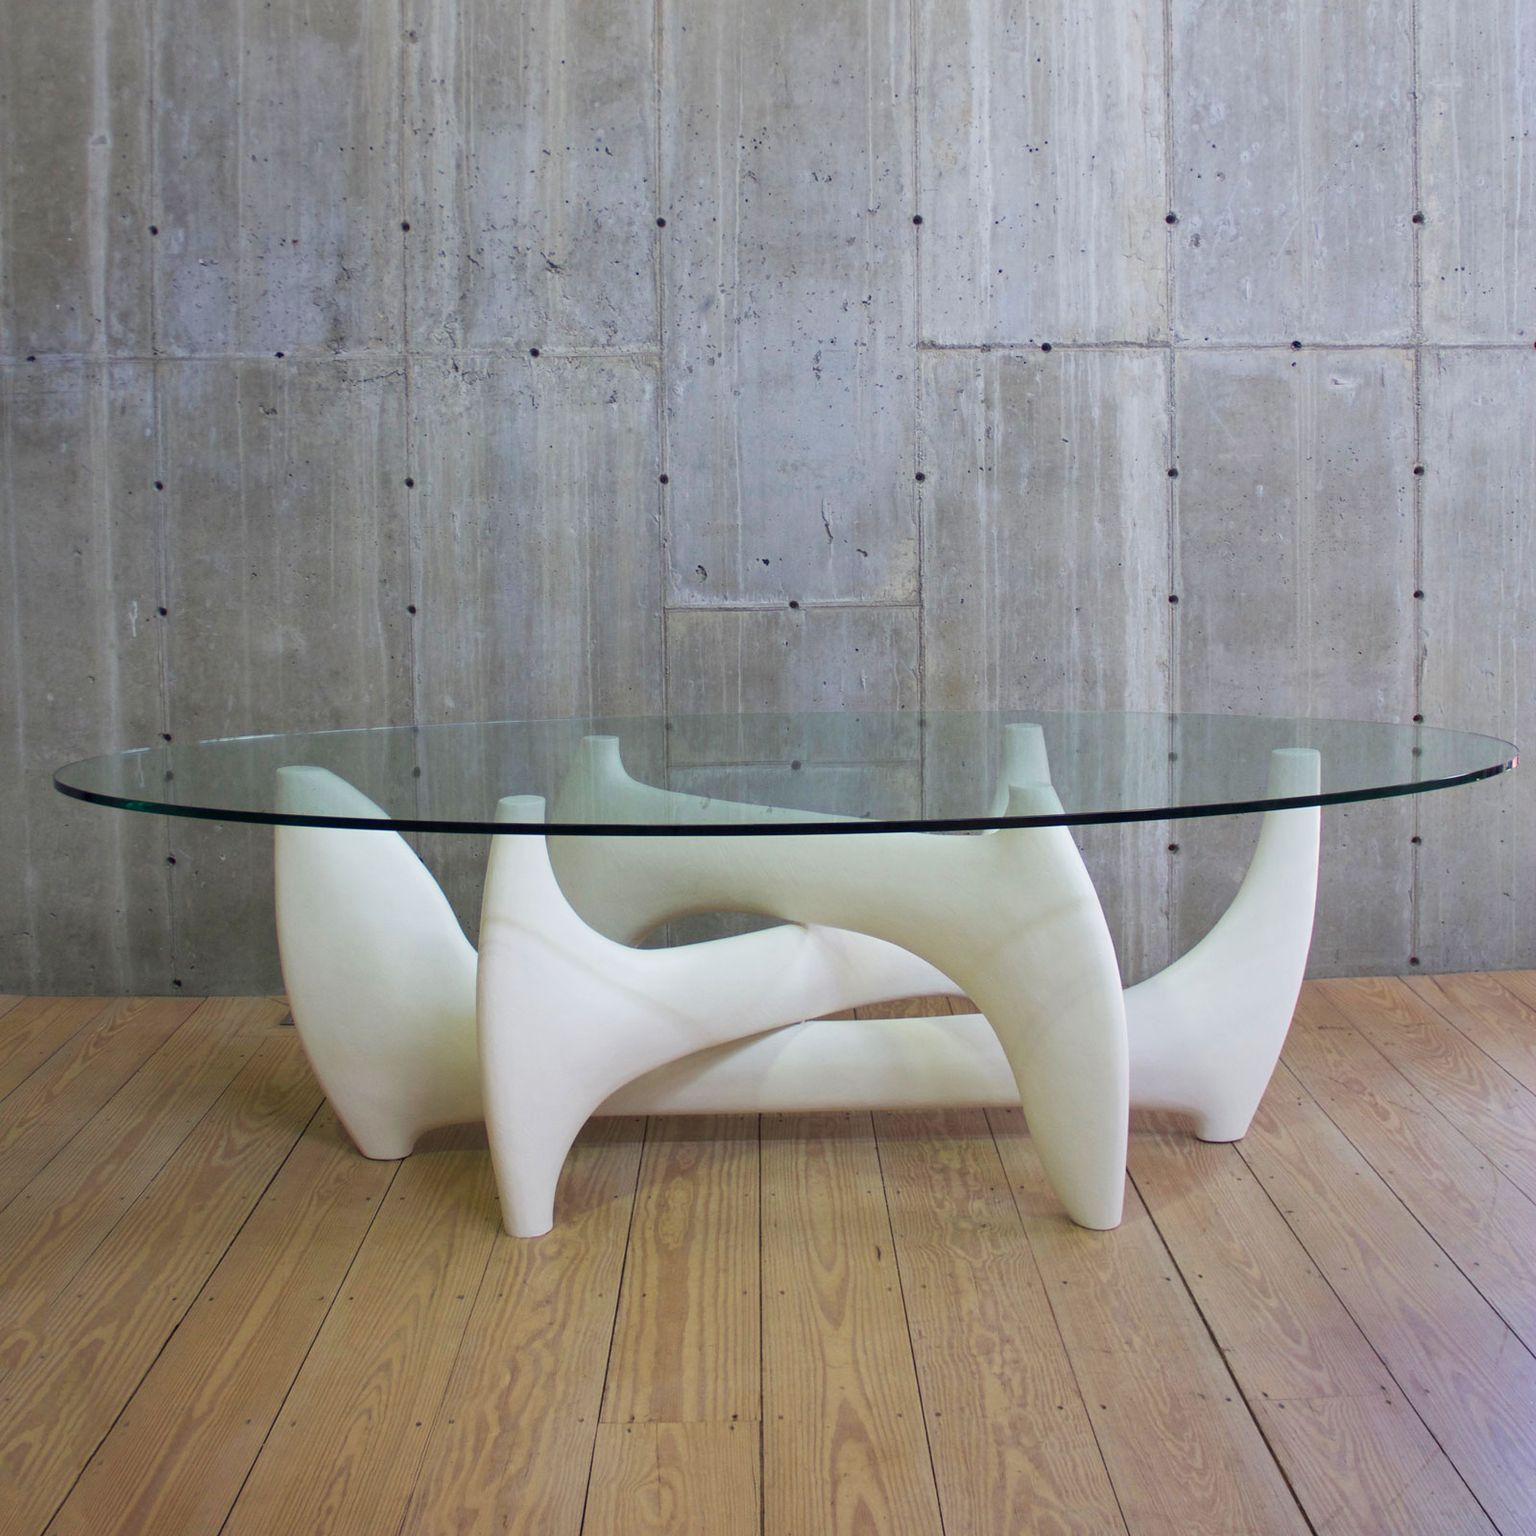 Unique glass table tops